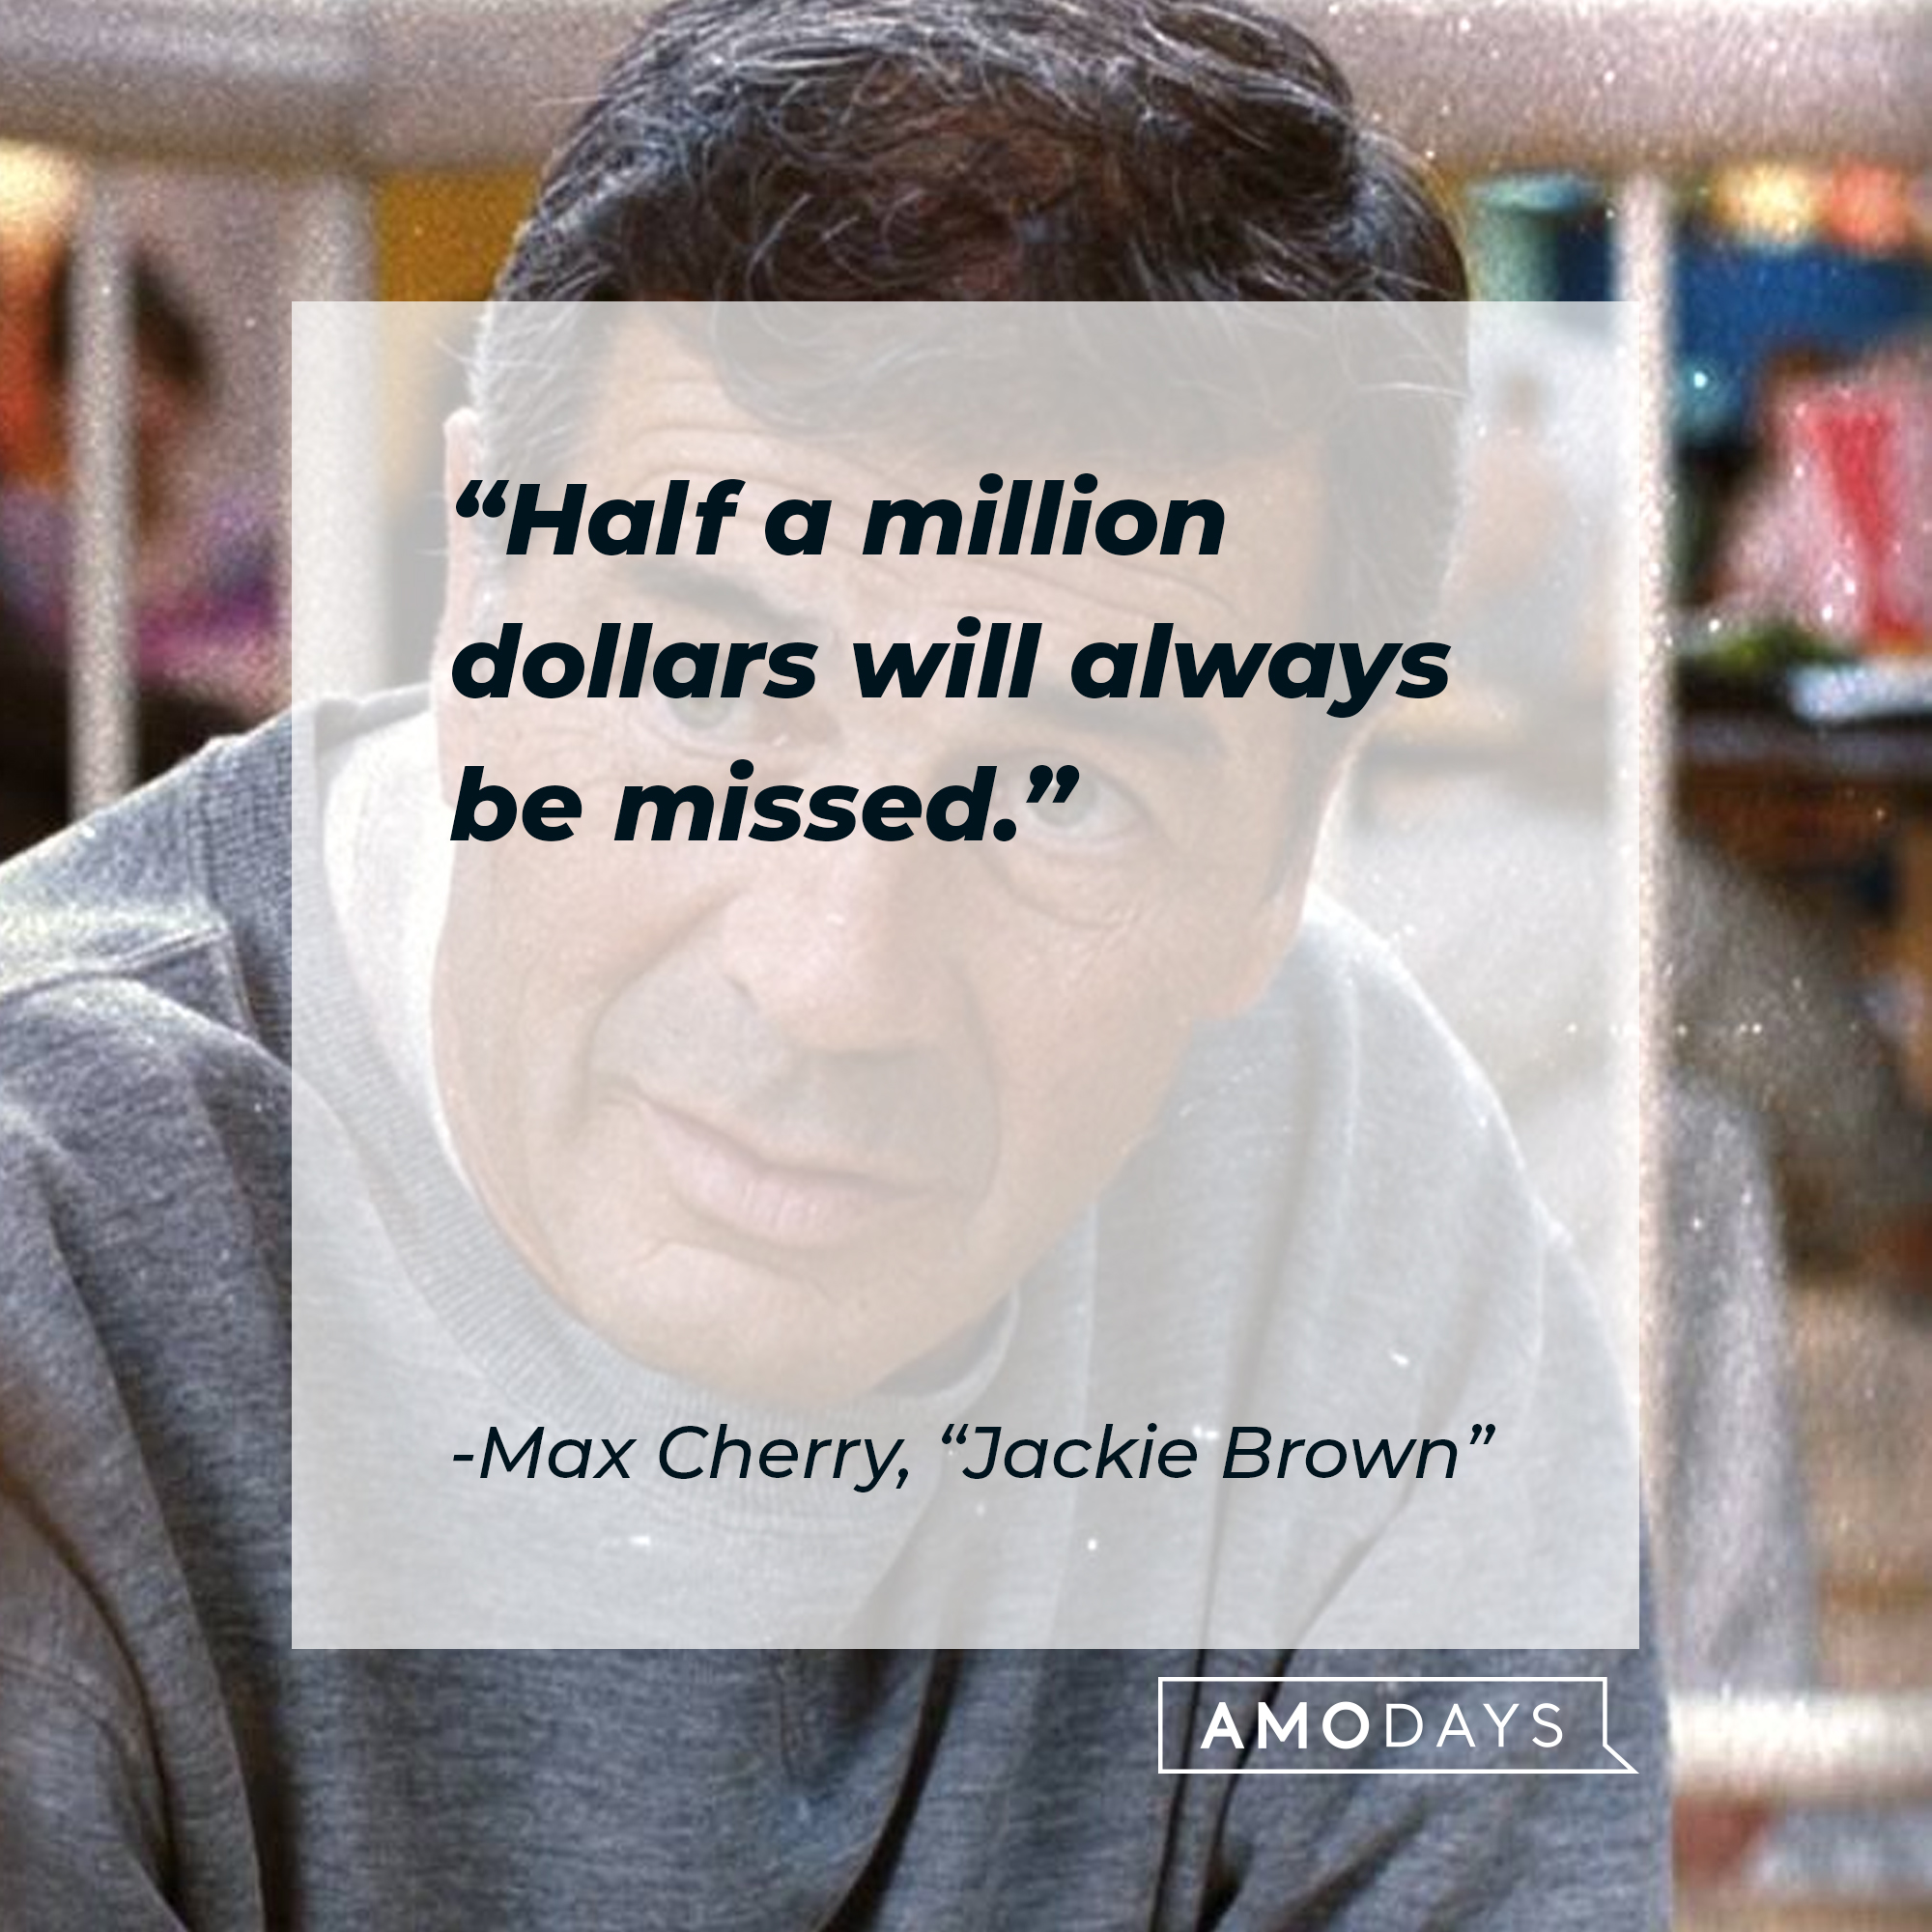 Max Cherry's quote: "Half a million dollars will always be missed." | Source: Facebook/JackieBrownMovie